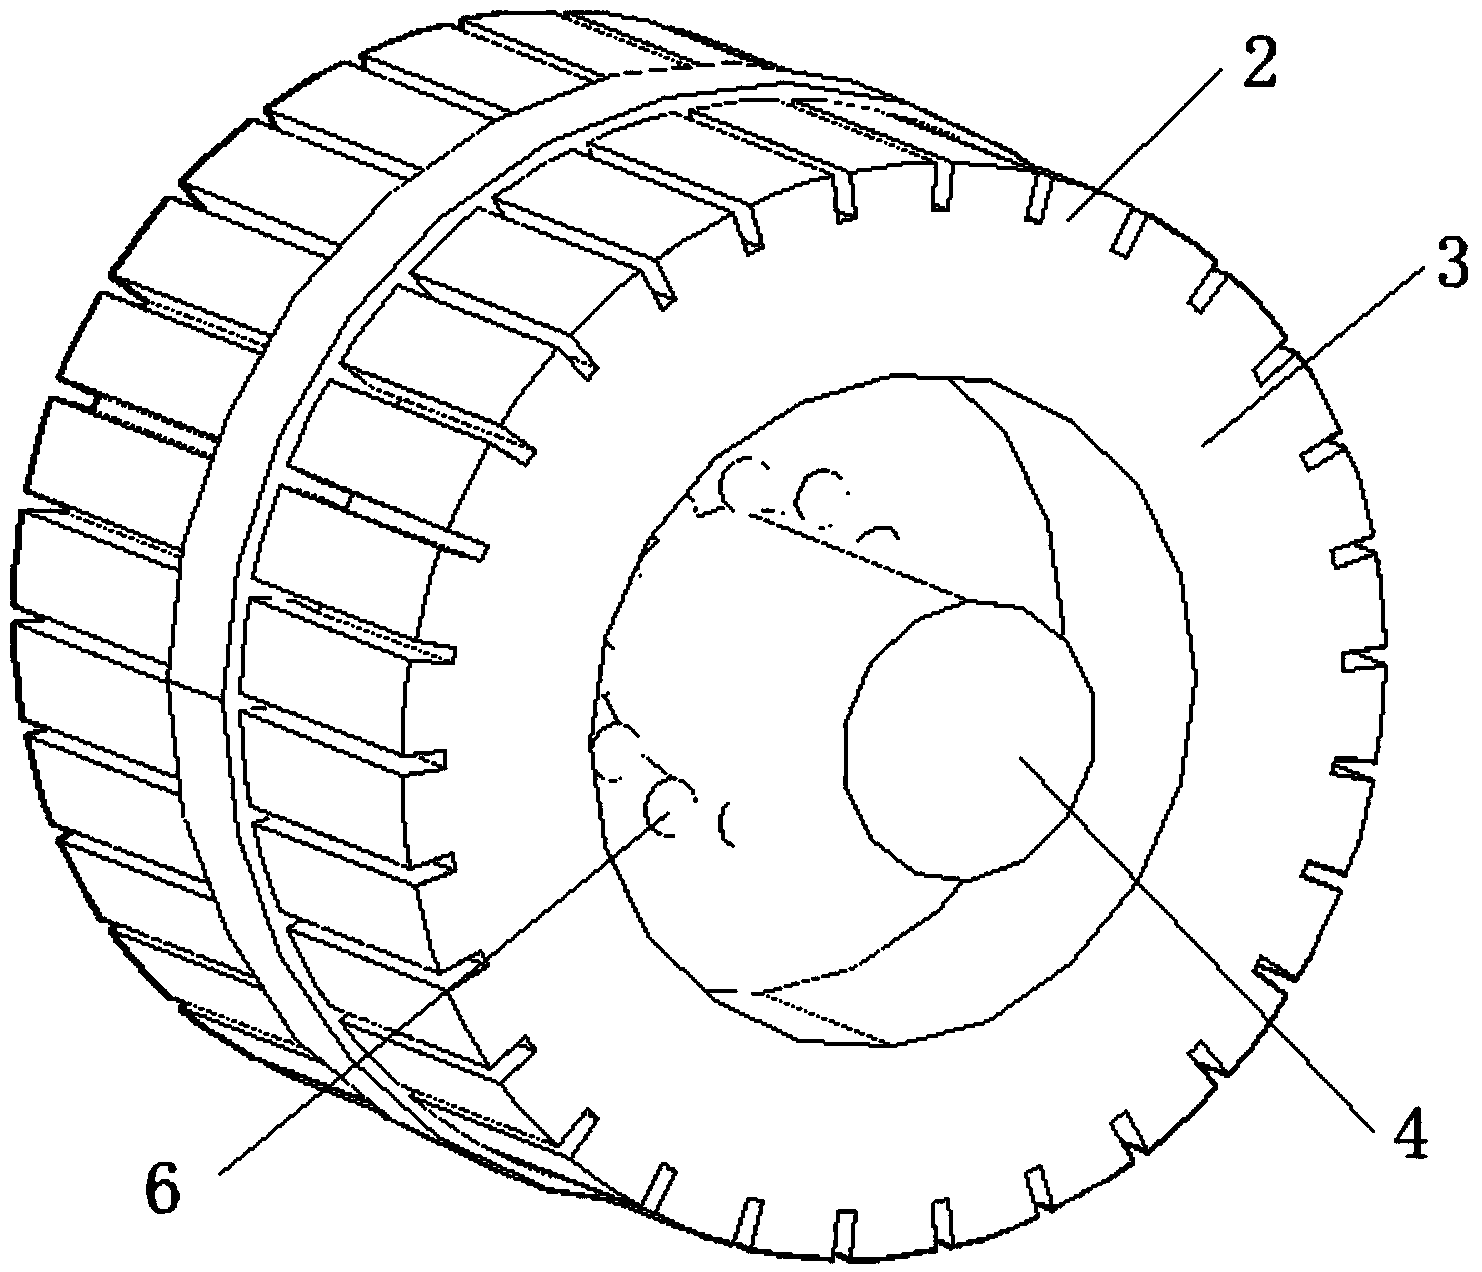 A birotor wheel hub electric automobile motor